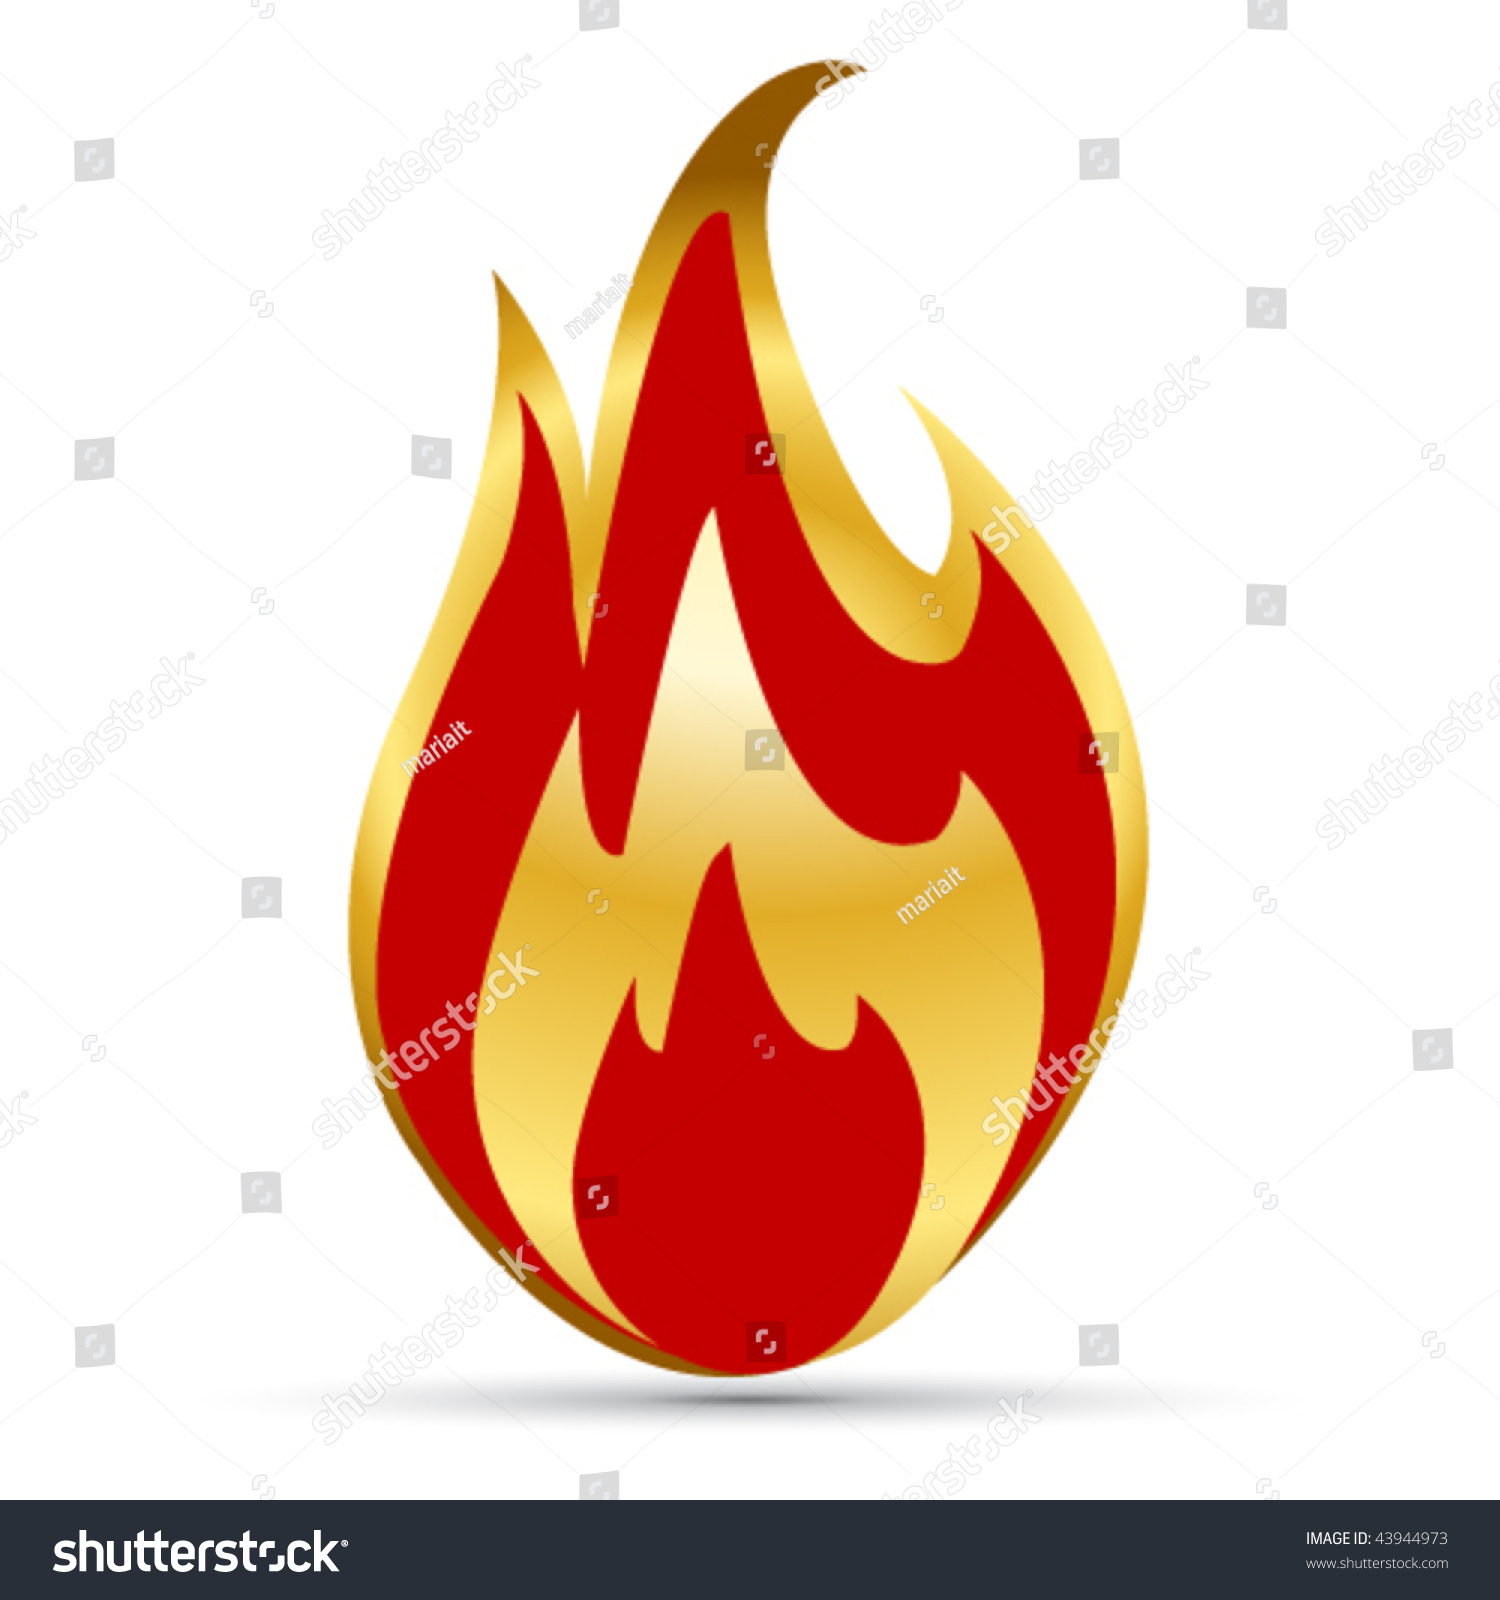 Flame Icon Stock Vector Illustration 43944973 : Shutterstock